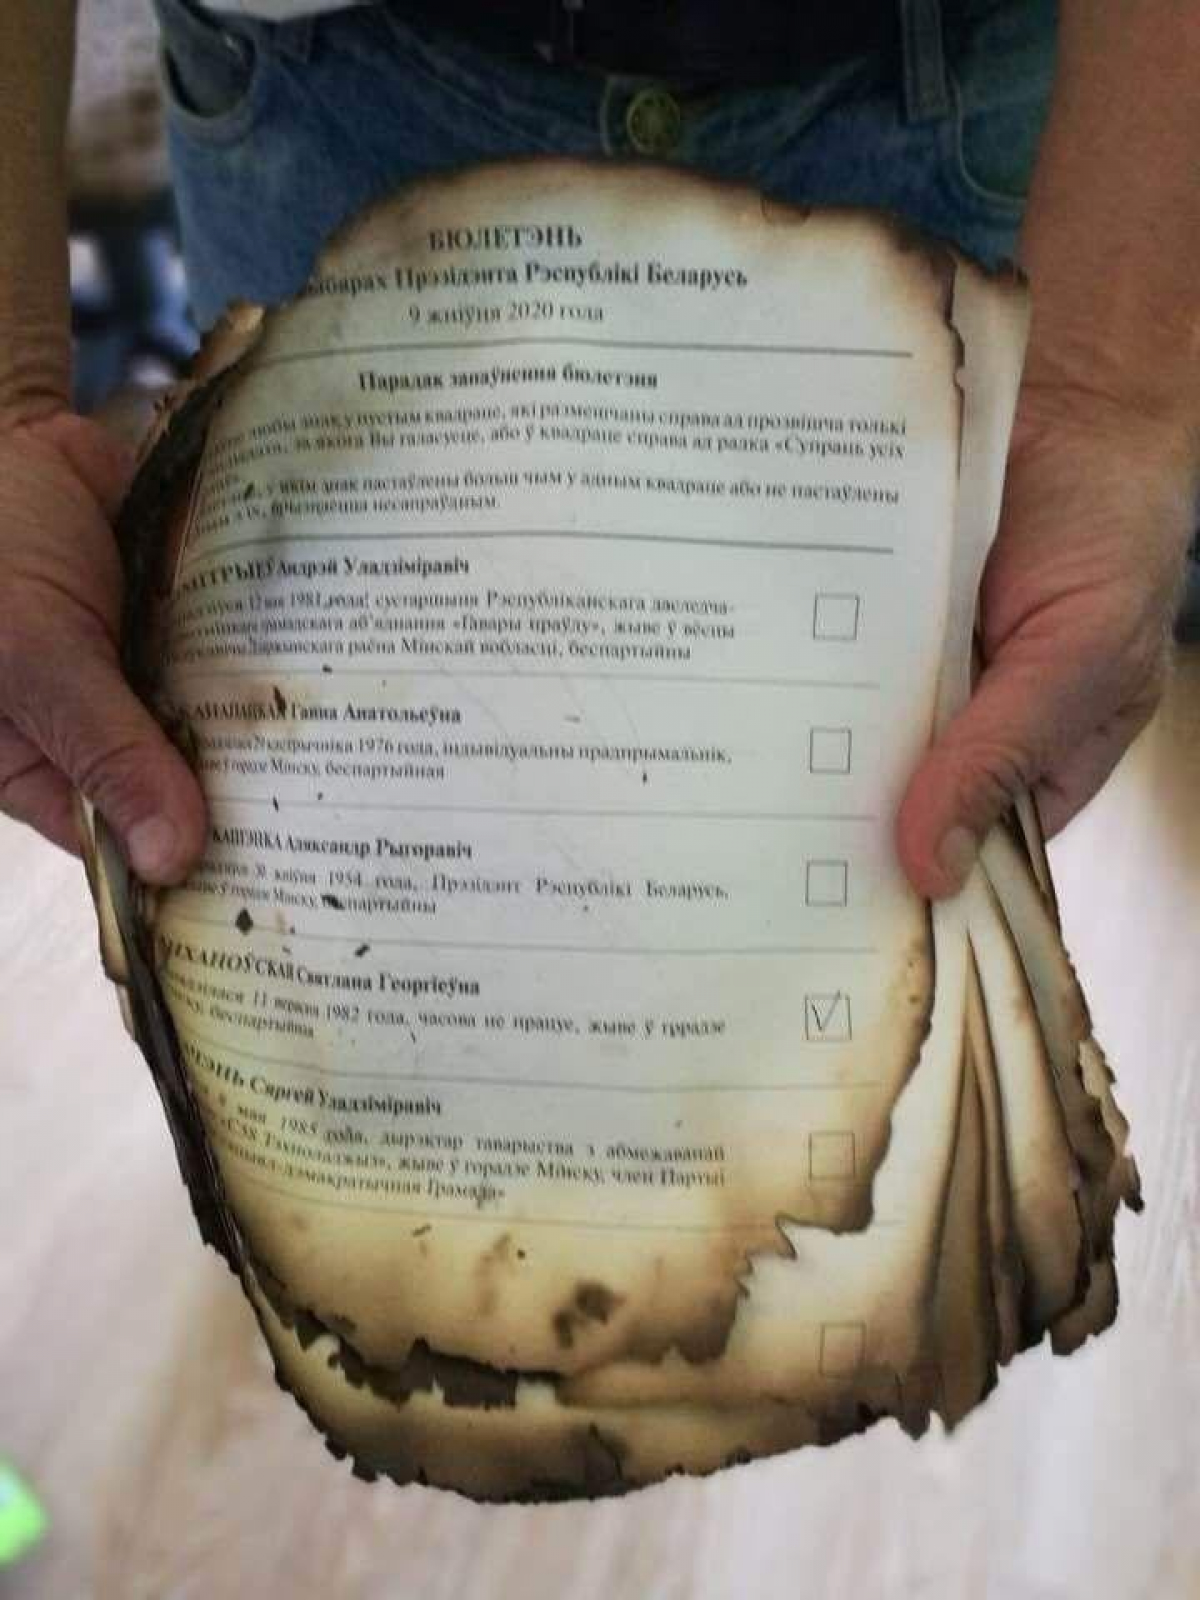 A half-burned ballot found in a boiler room in Brest has a mark near Tsikhanouskaya’s name. Photo: NEXTA telegram channel ~